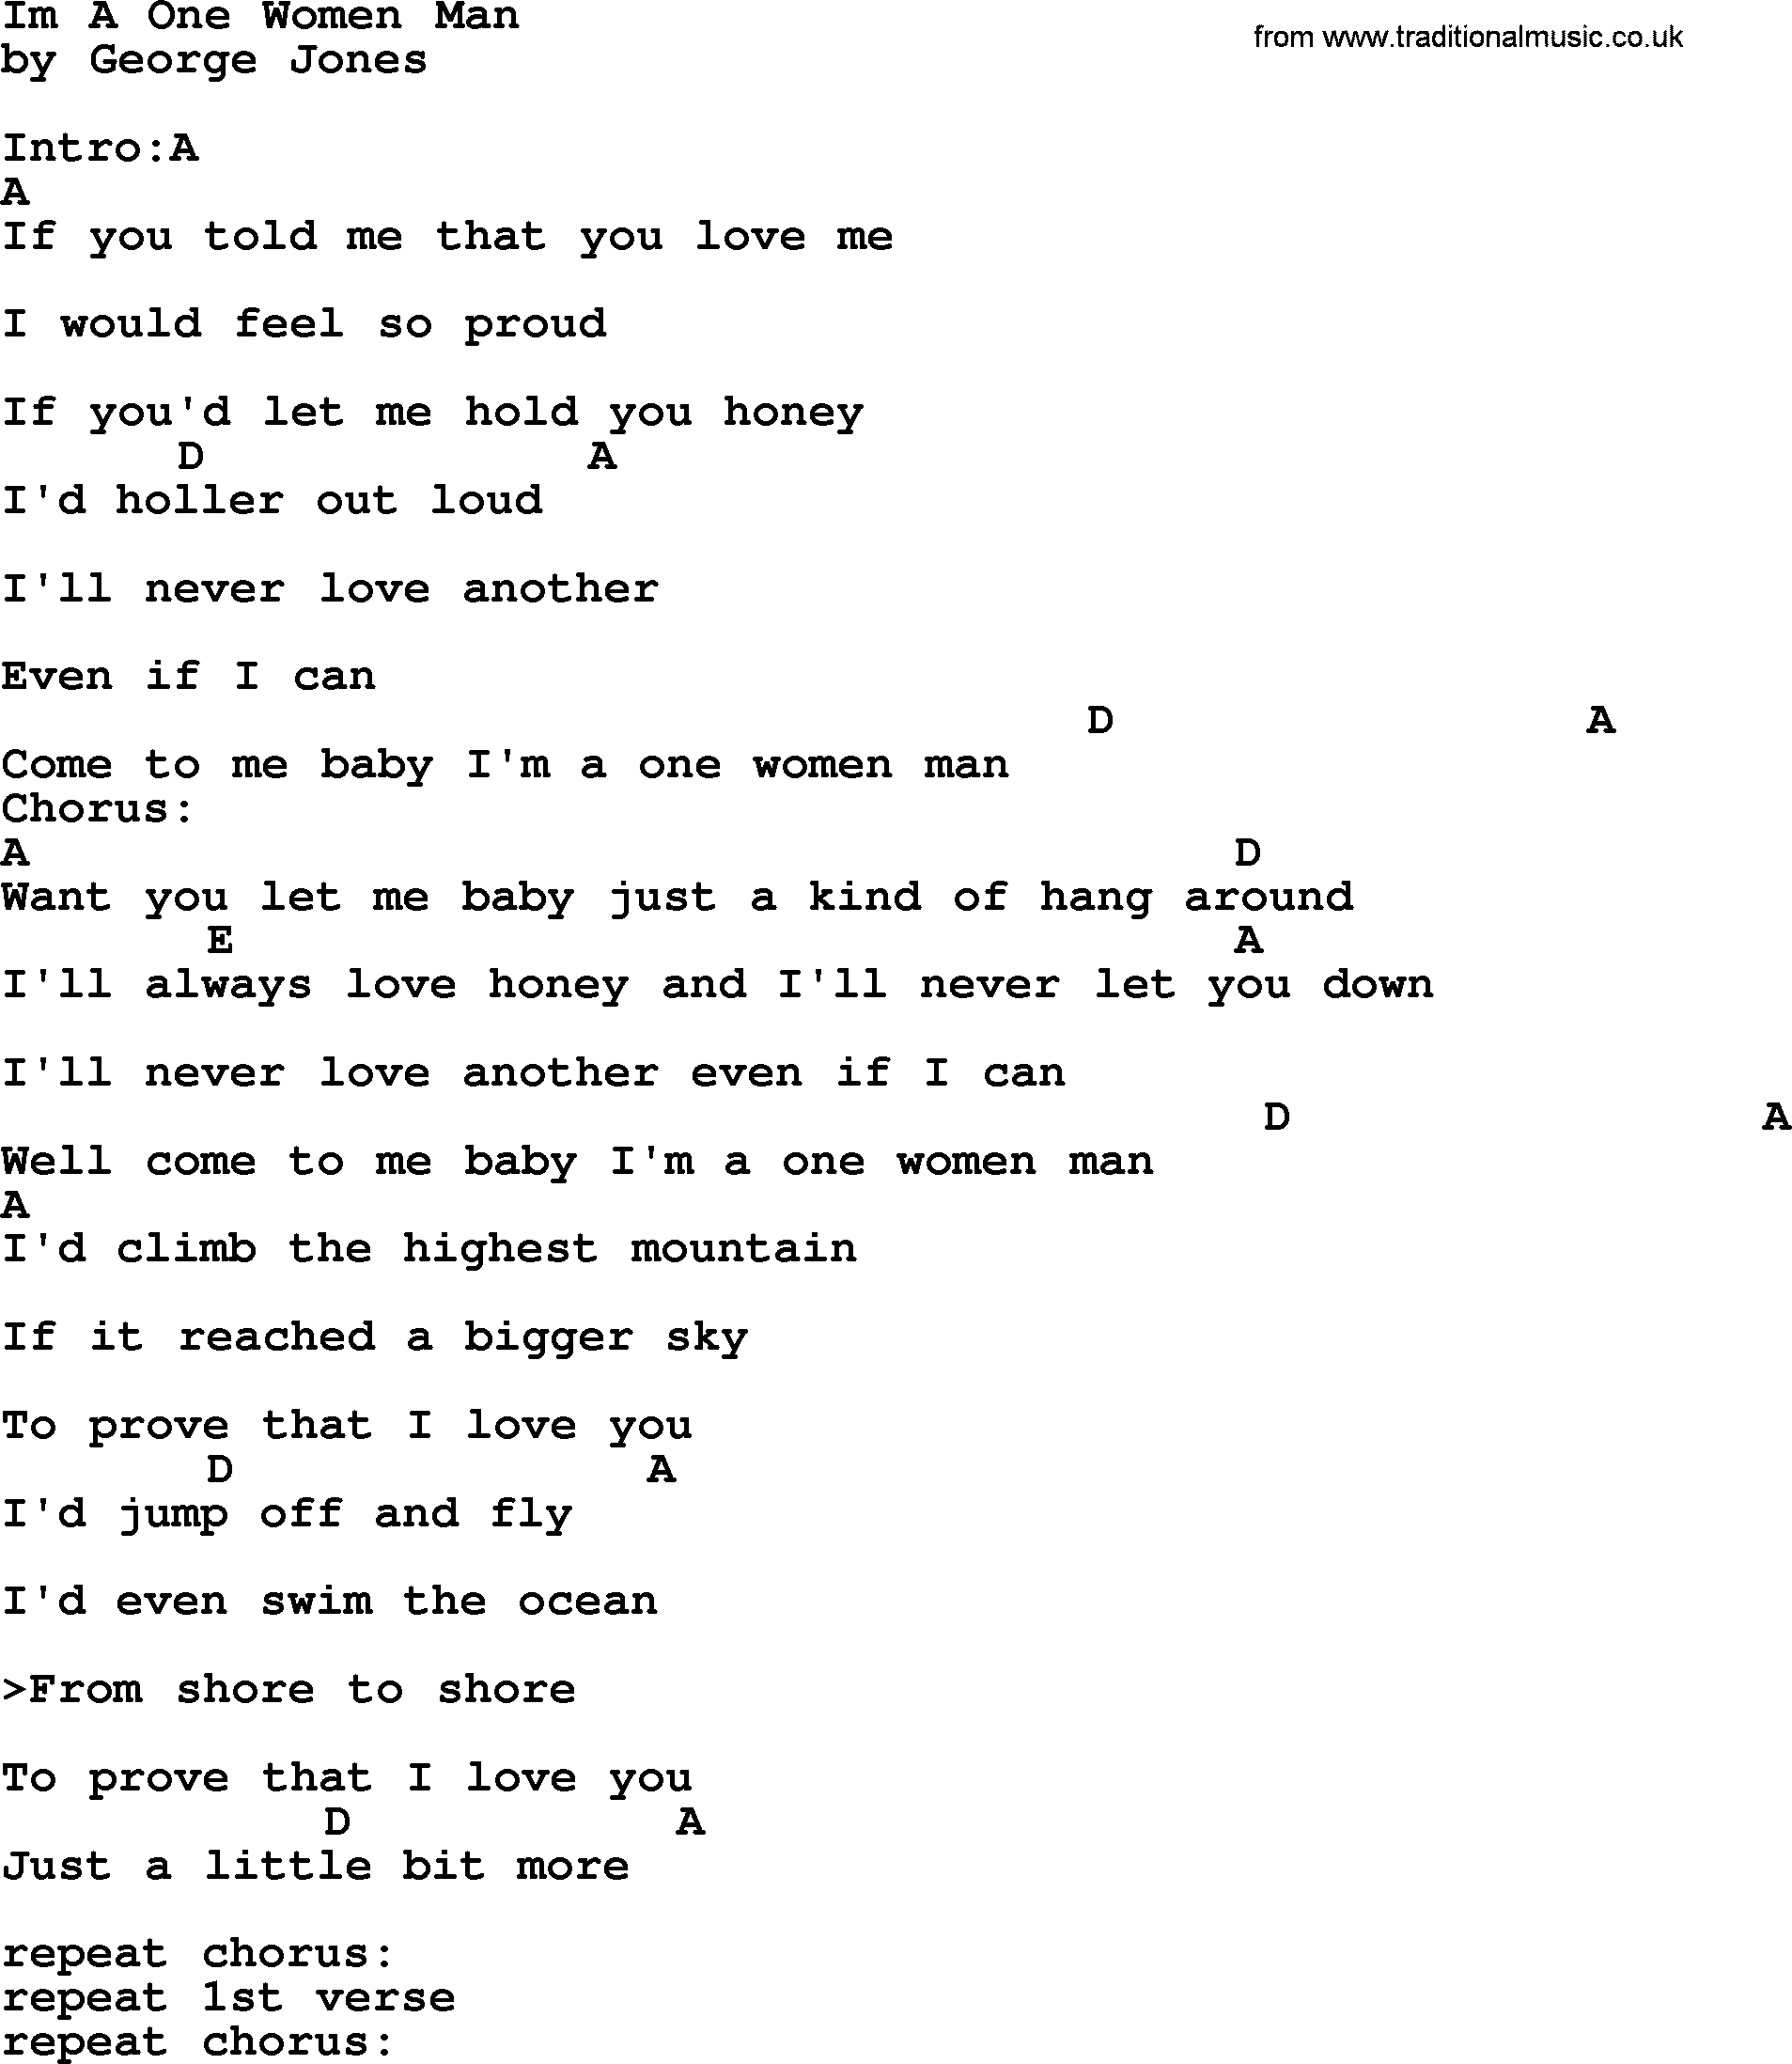 George Jones song: Im A One Women Man, lyrics and chords